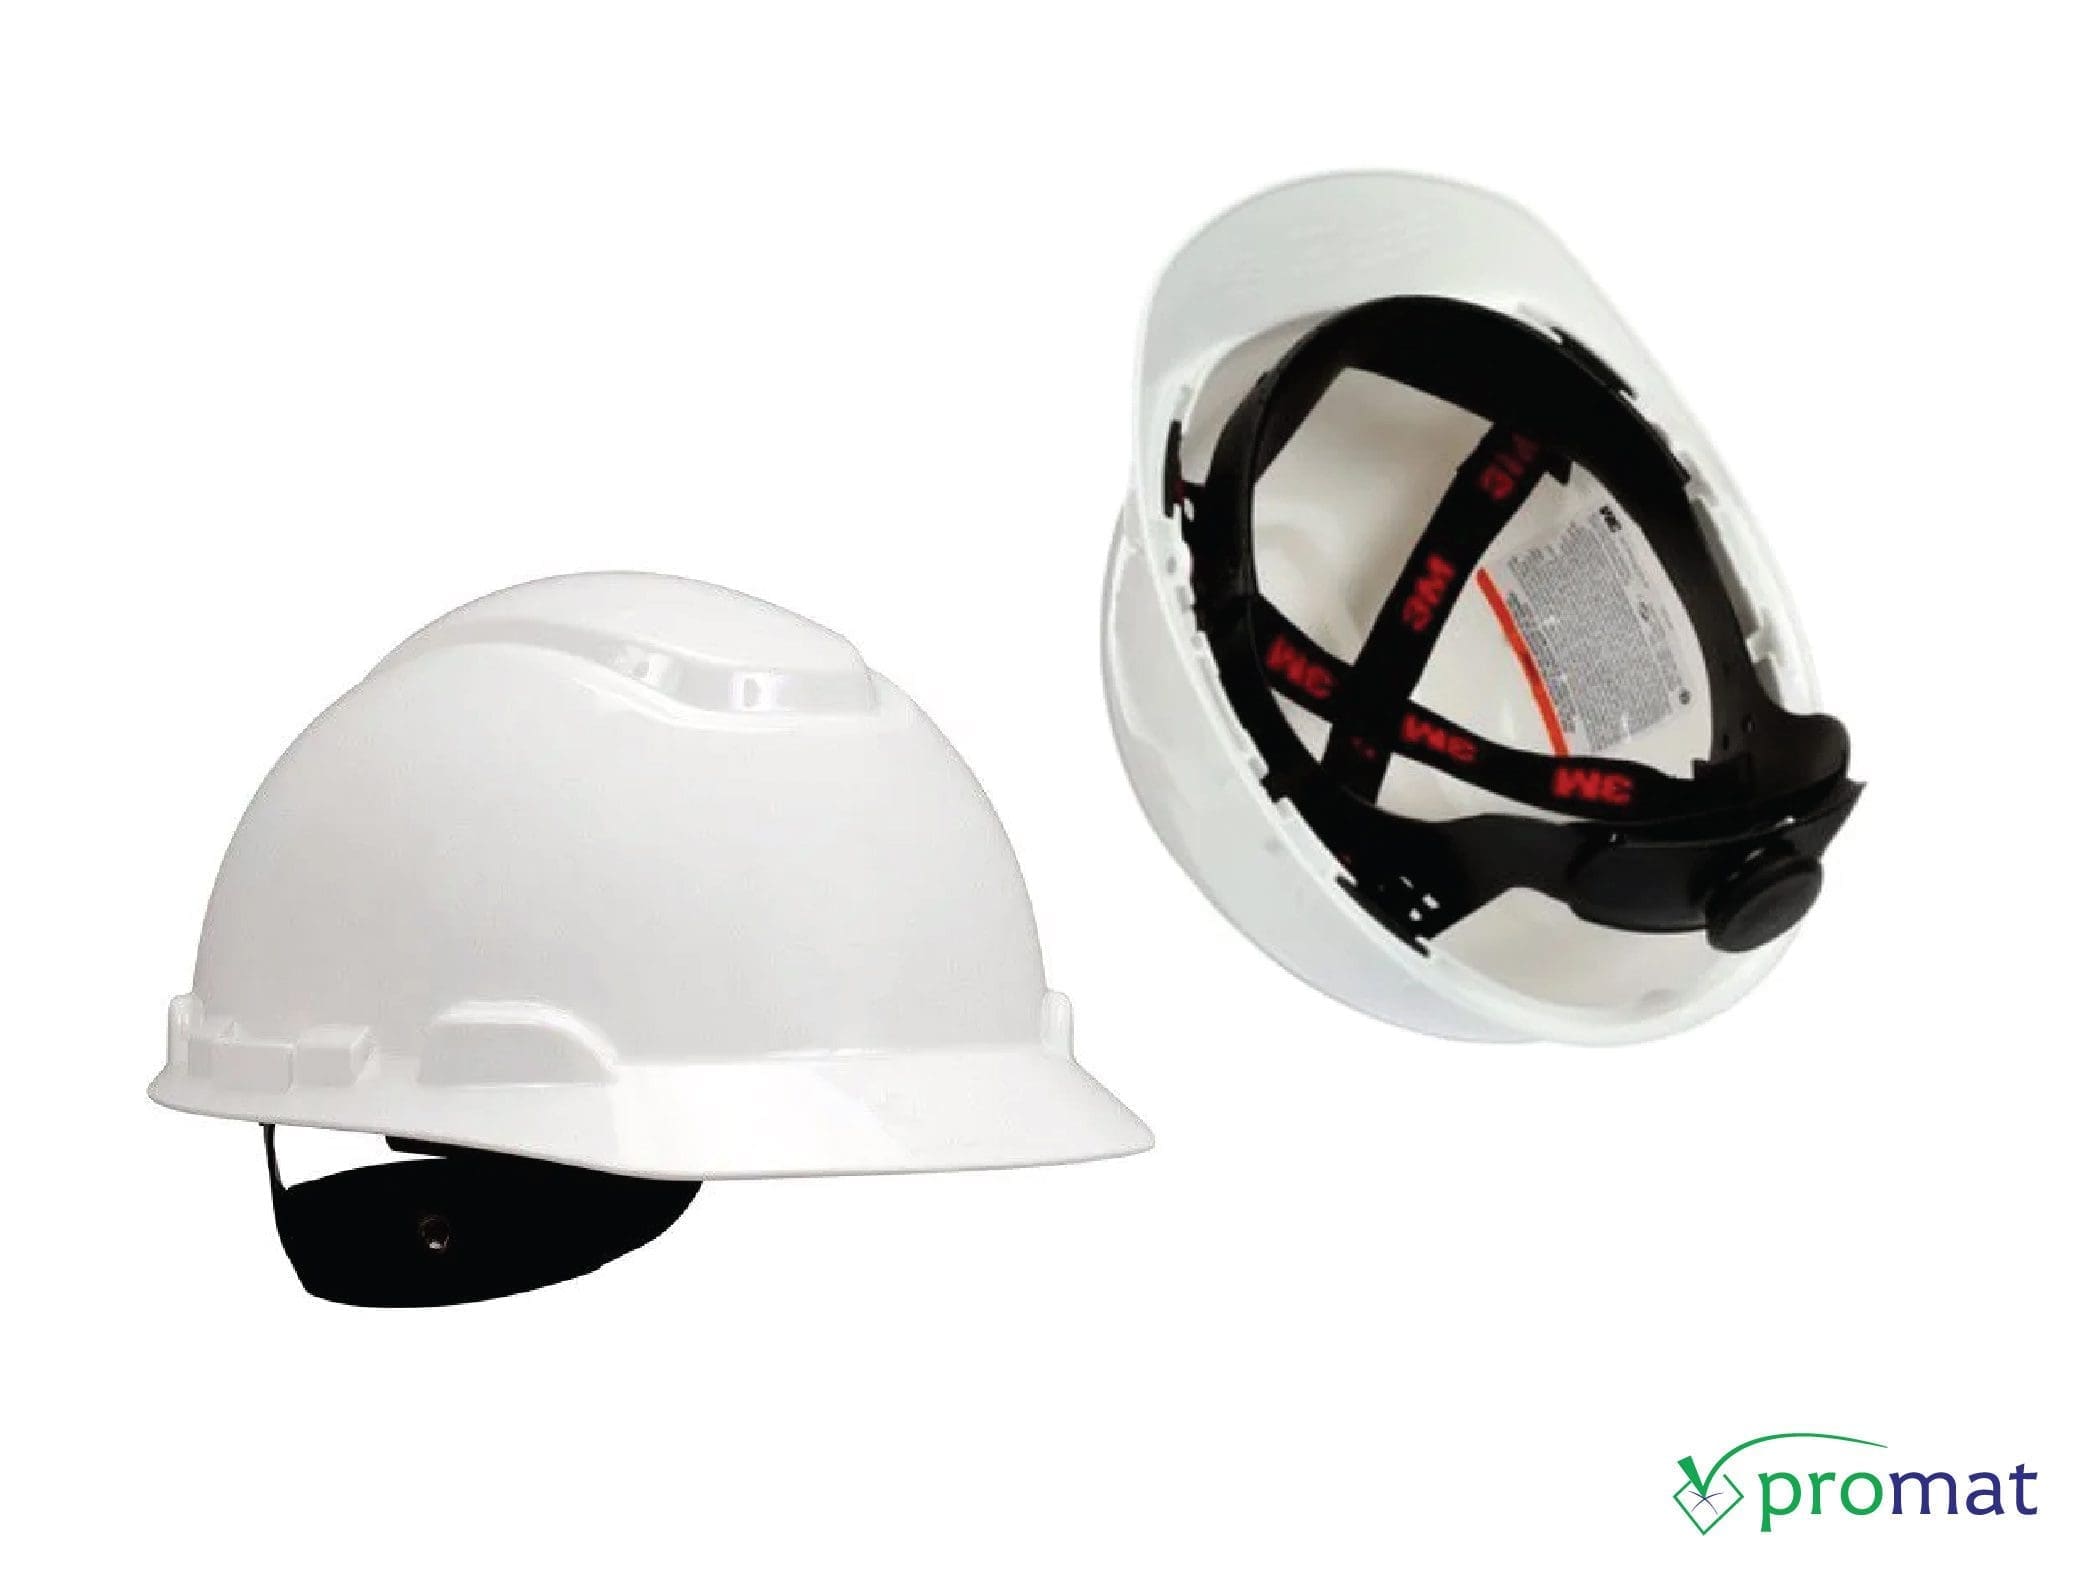 safety helmets promat vietnam; promat.com.vn; promat; professional material supplier; công ty promat;